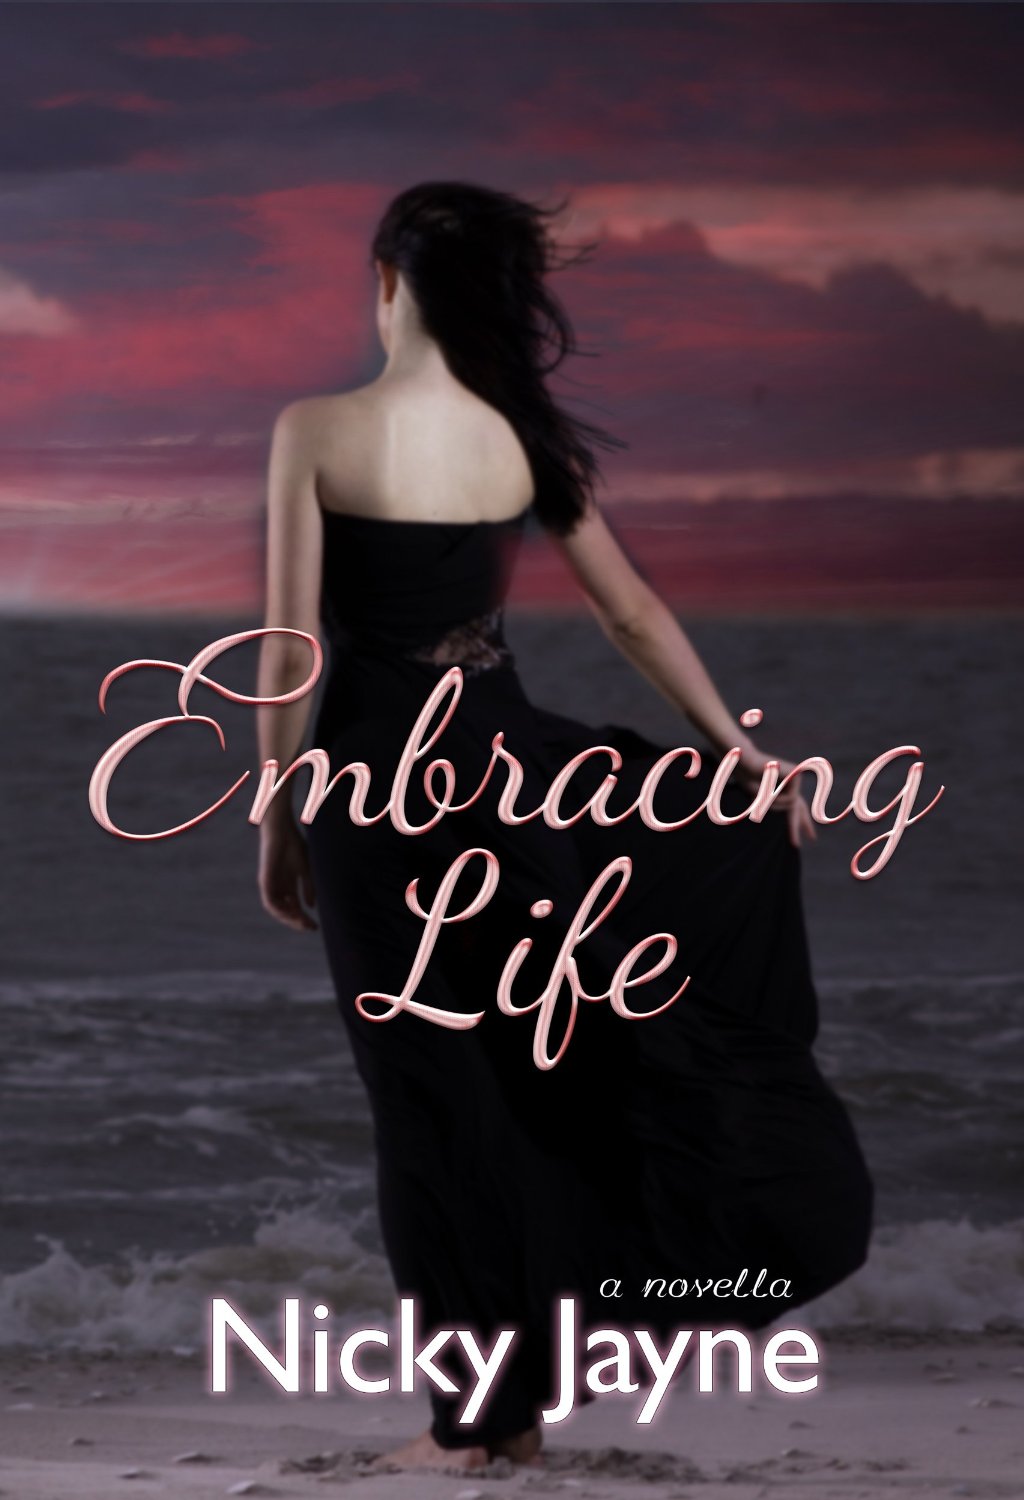 Embracing Life by Nicky Jayne